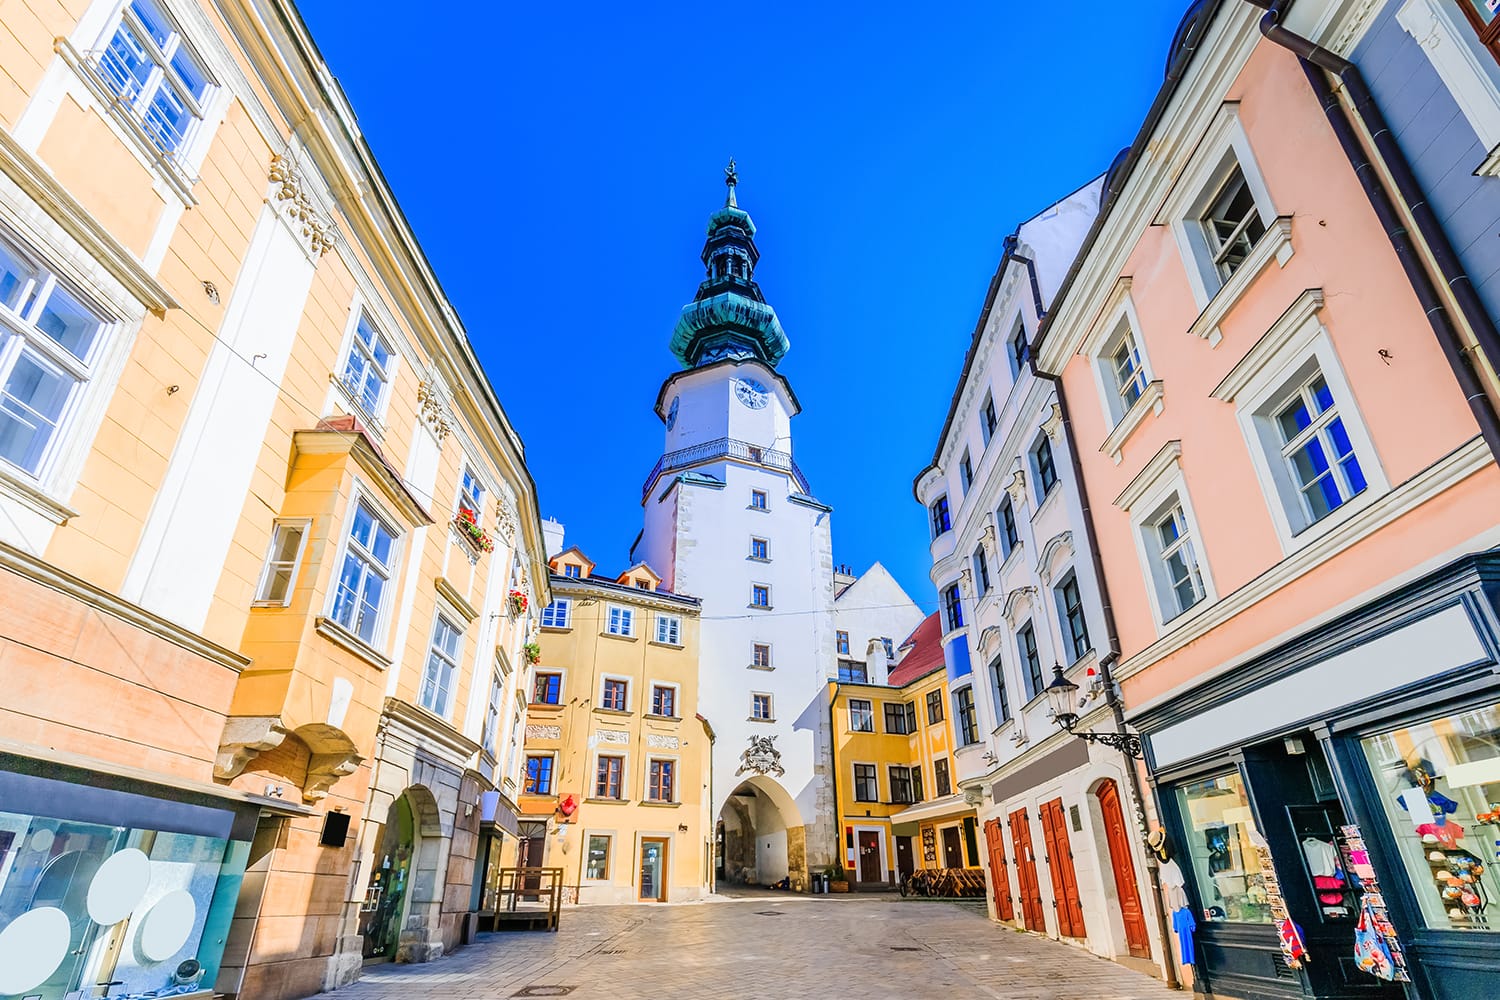 Medieval Saint Michael Gate tower in Bratislava, Slovakia